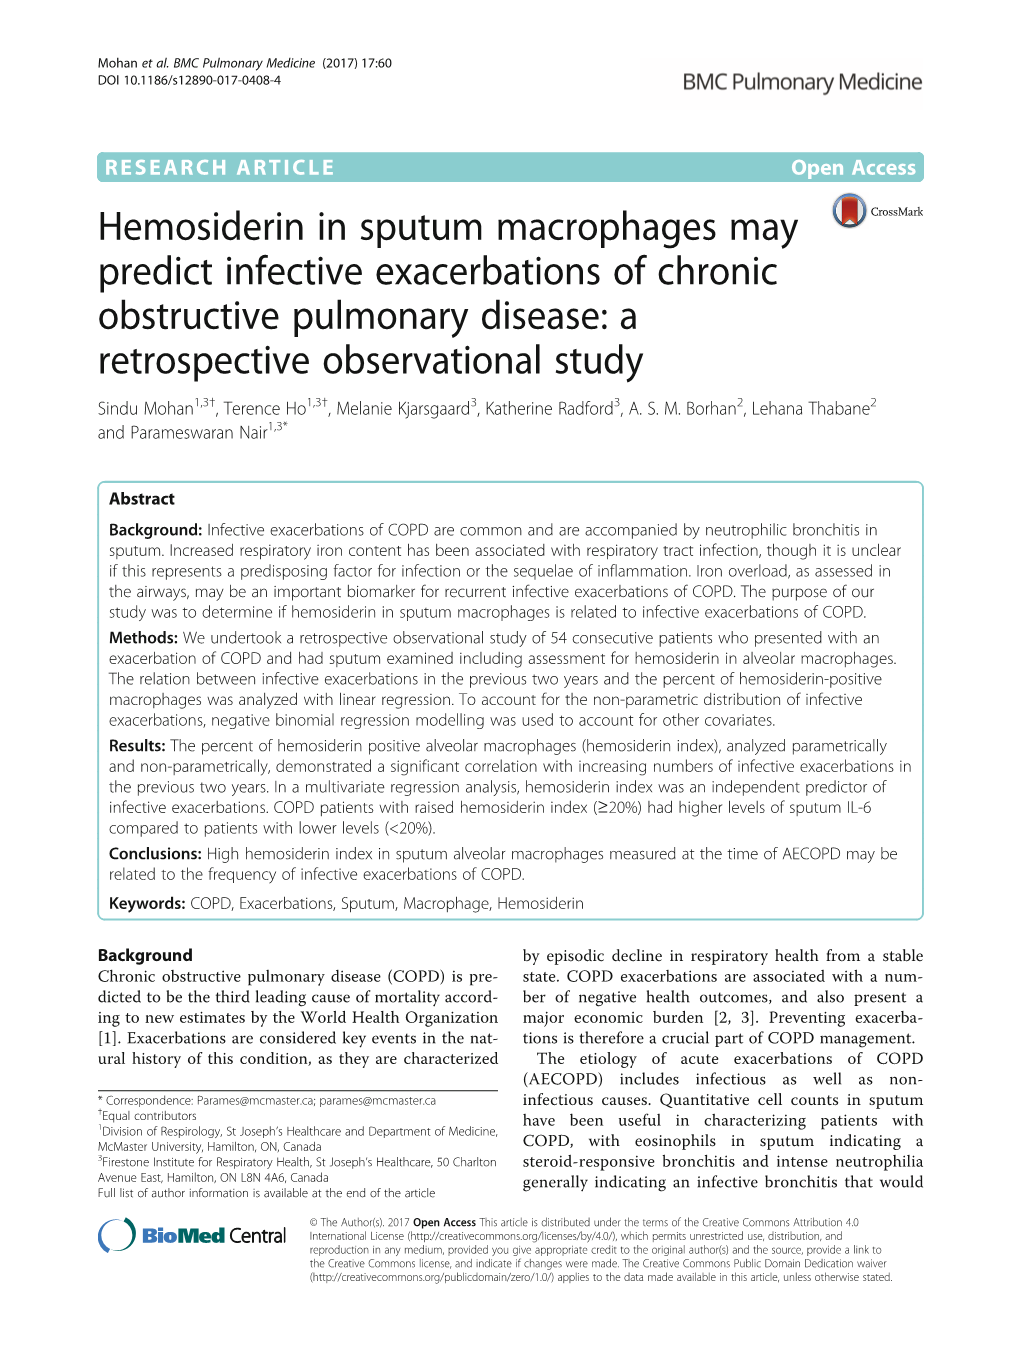 Hemosiderin in Sputum Macrophages May Predict Infective Exacerbations